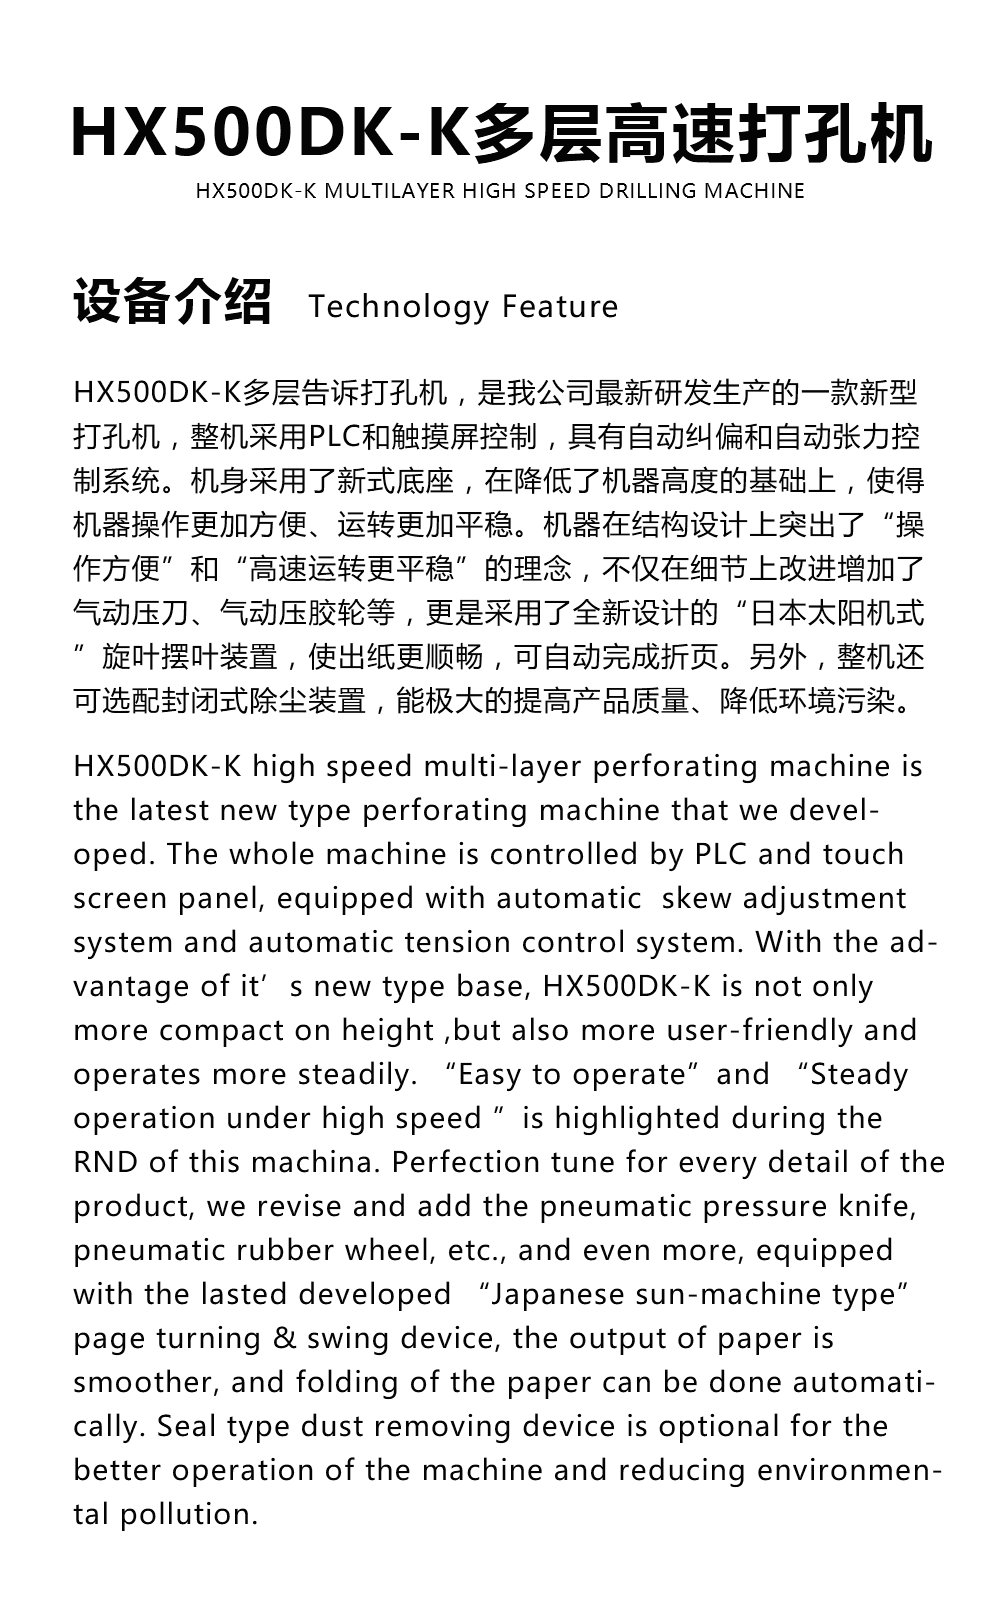 HX500DK-K多层高速打孔机产品介绍.png